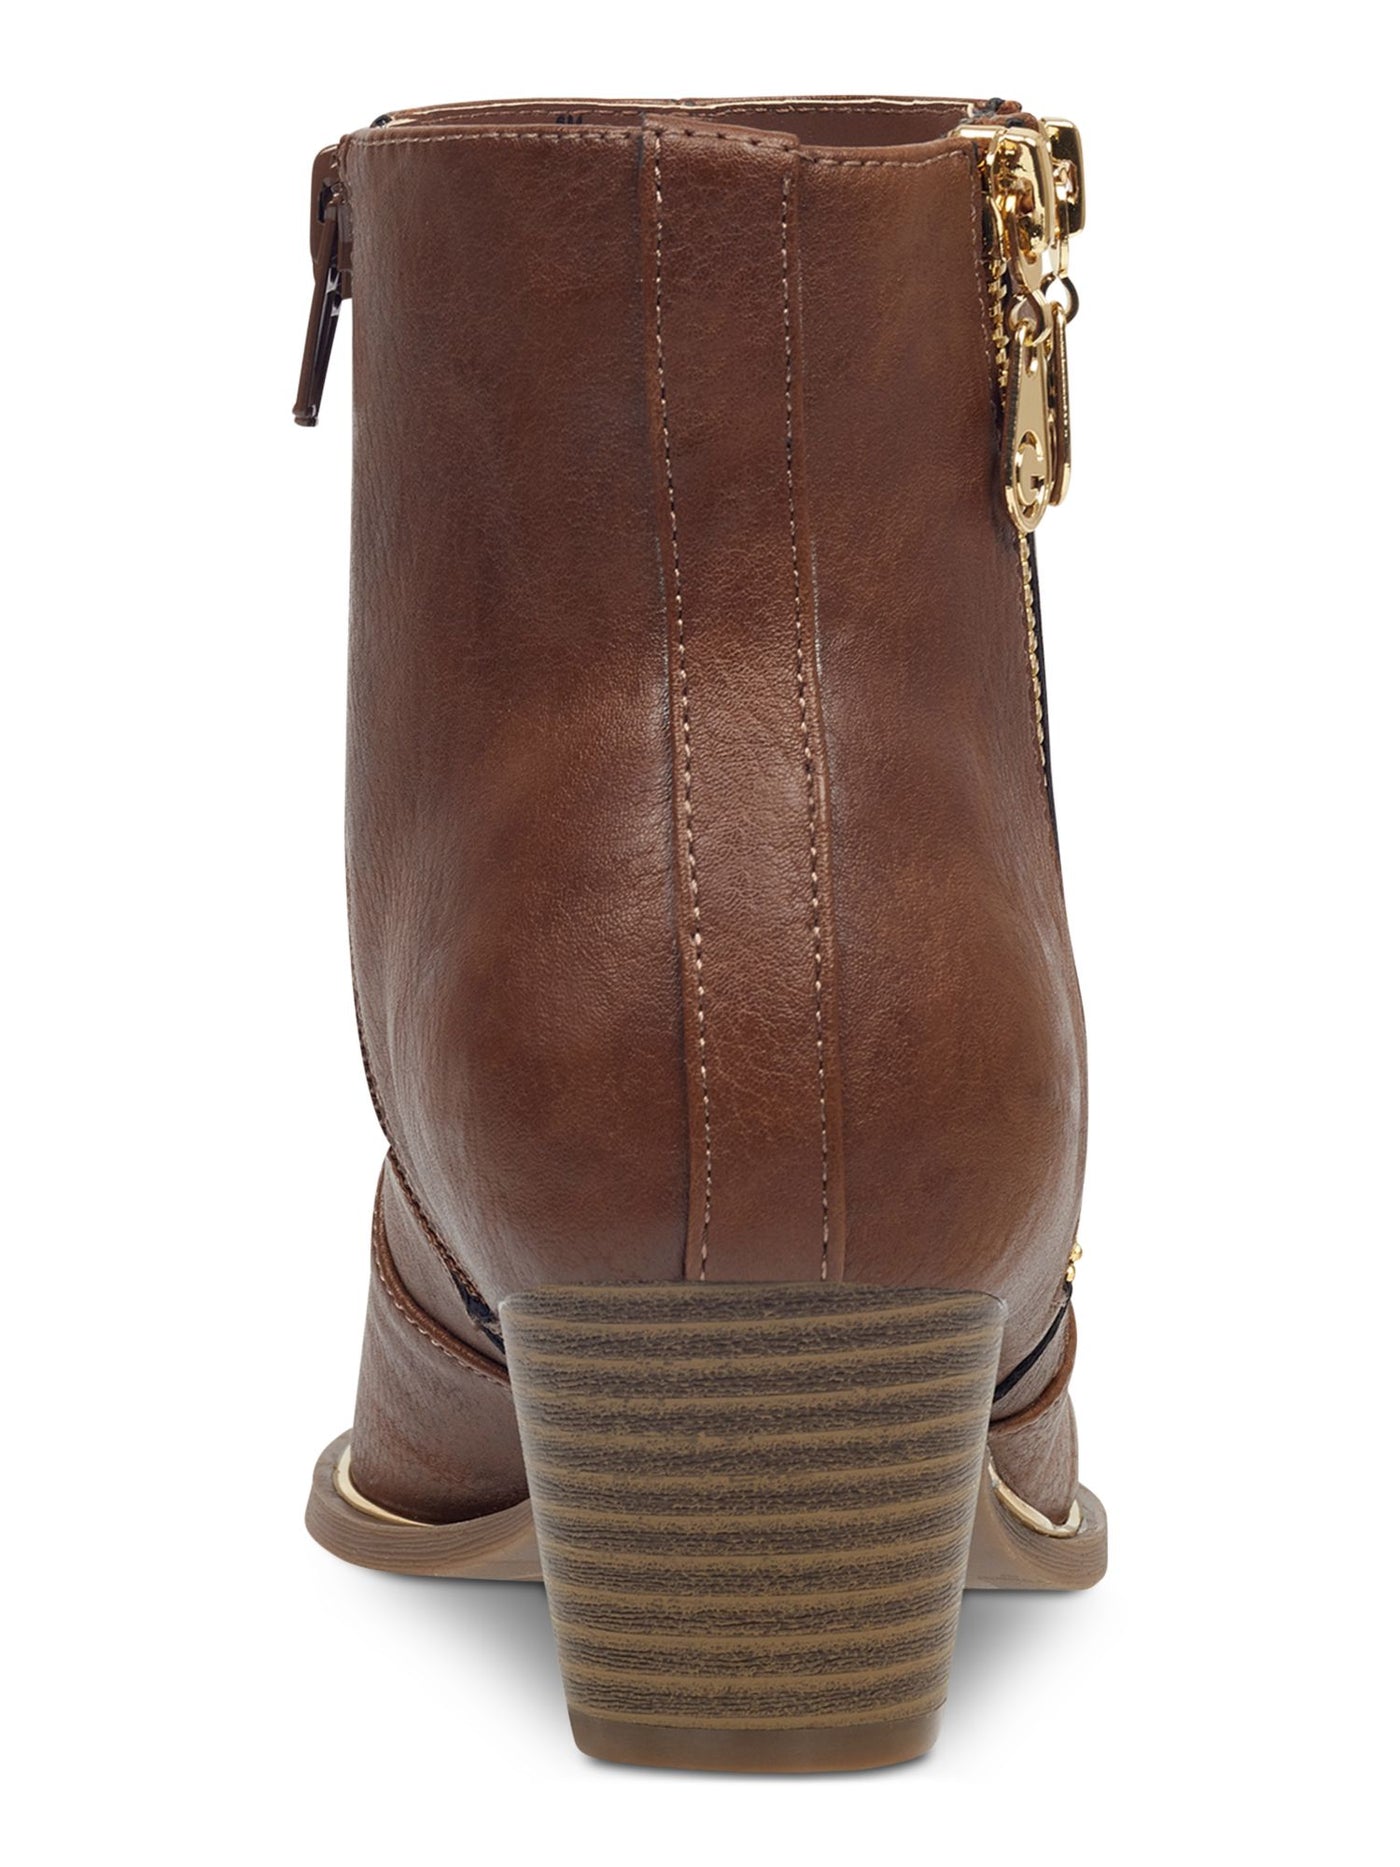 GBG Womens Brown Zipper Accent Padded Indiee Pointed Toe Block Heel Zip-Up Booties 6.5 M